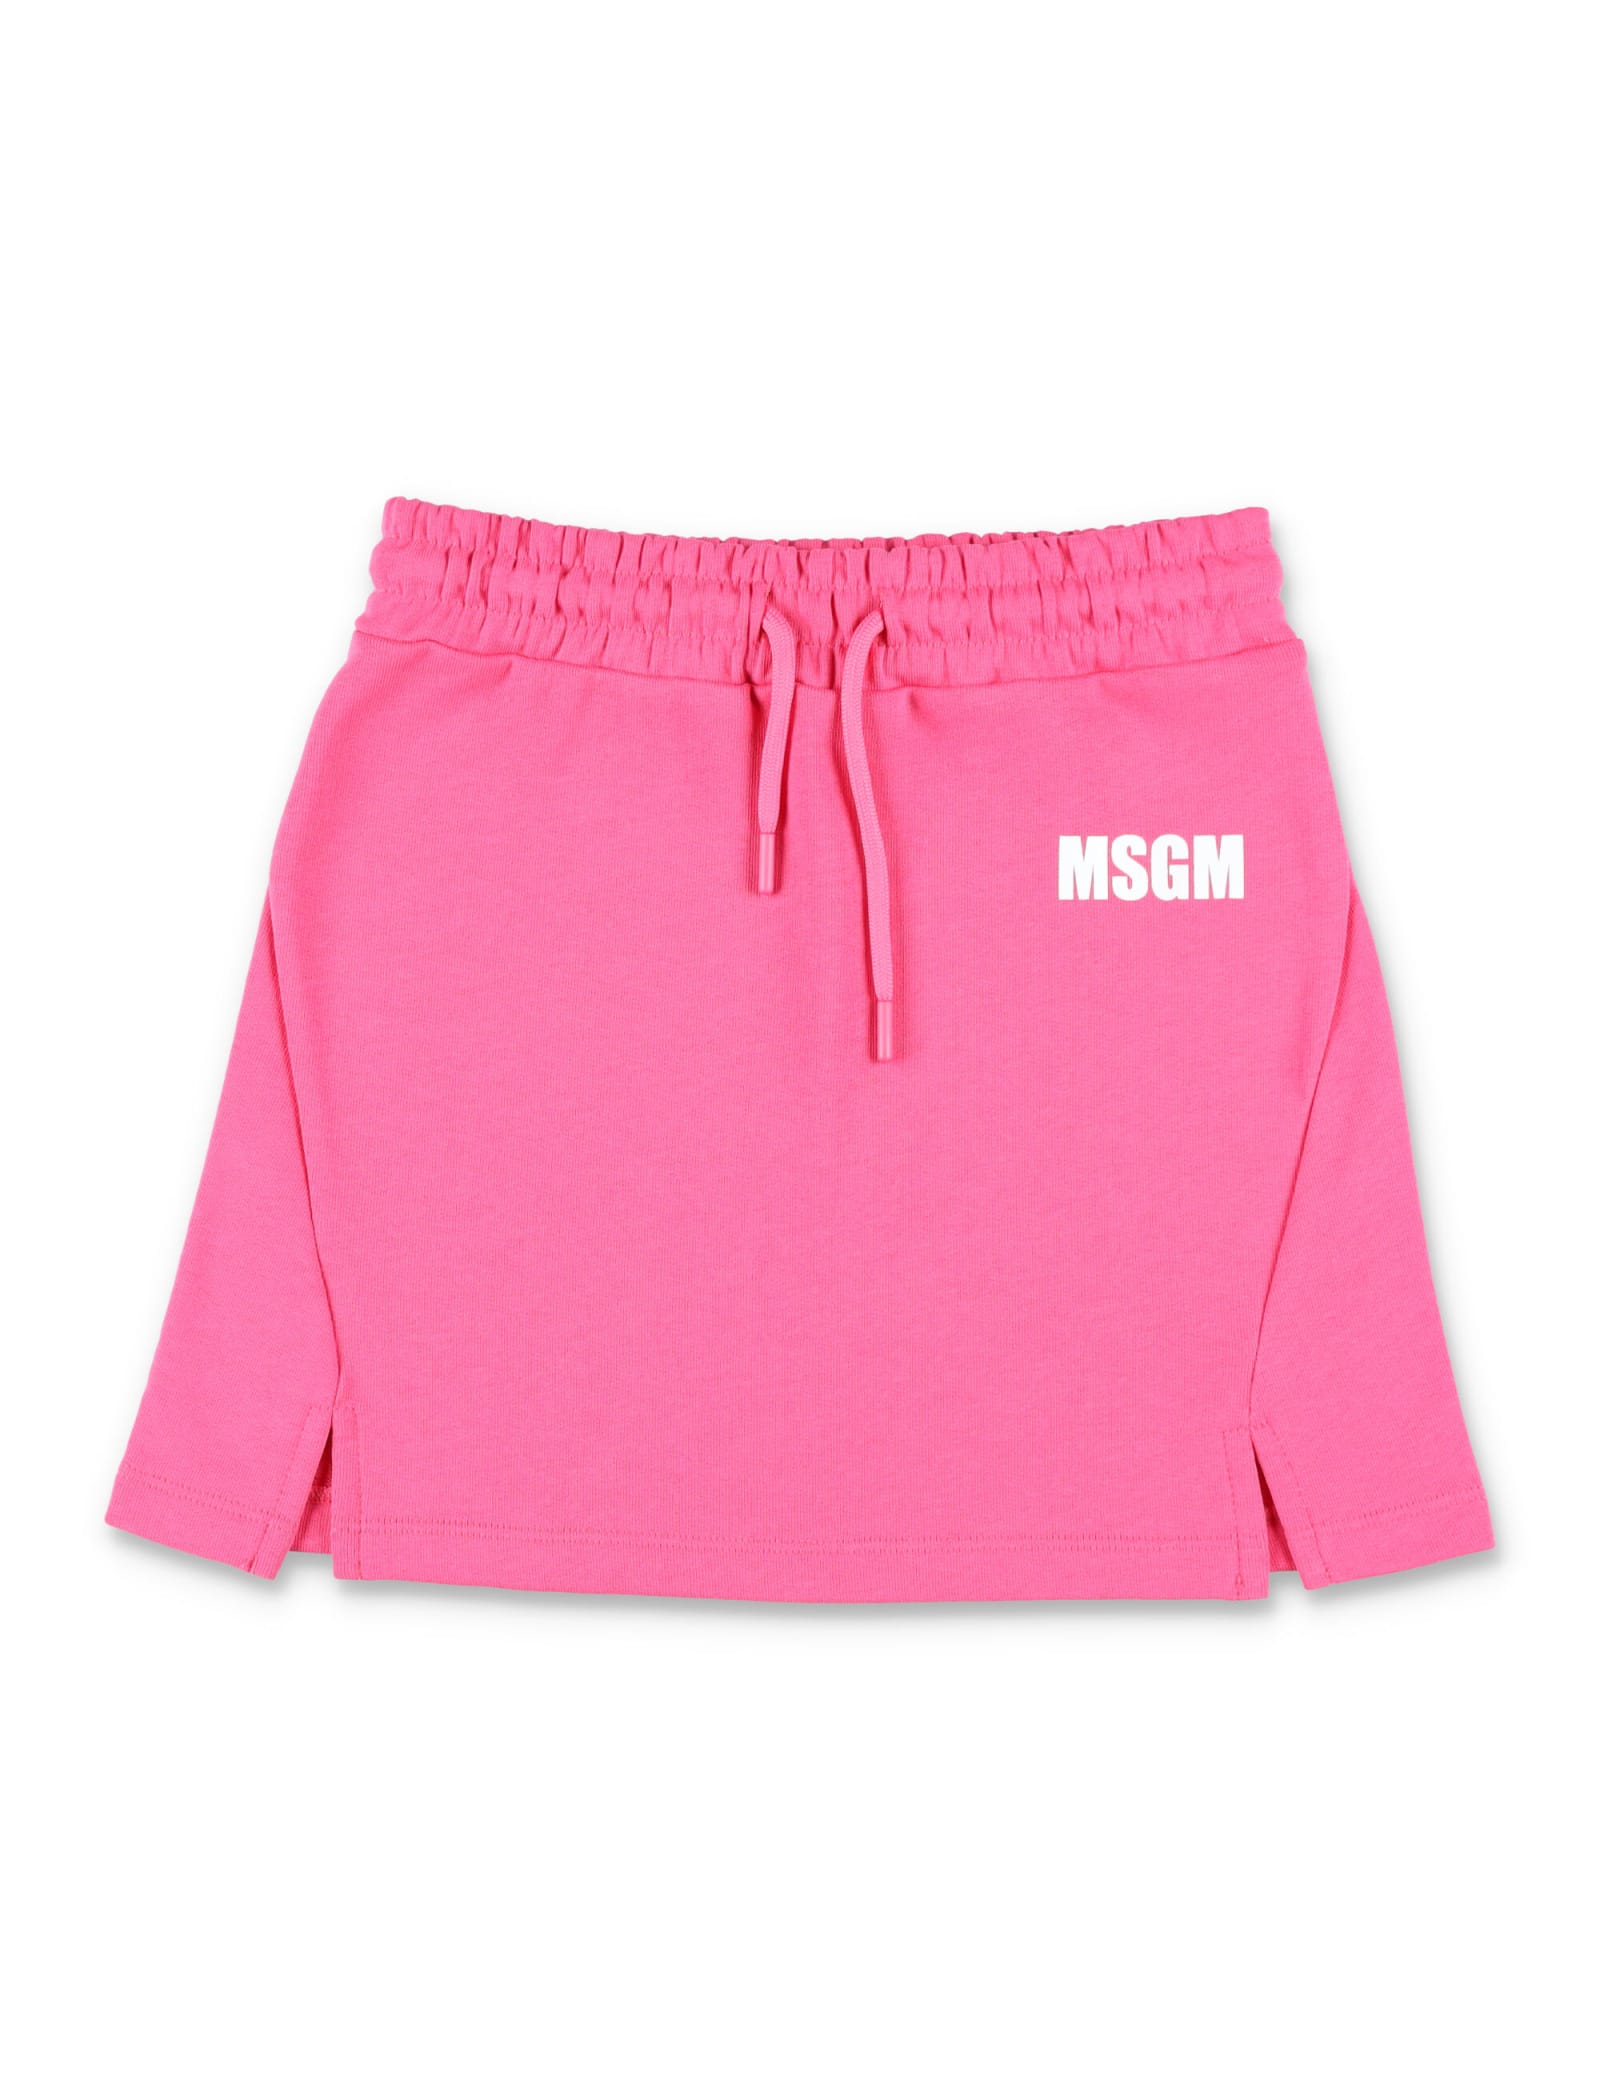 Msgm Kids' Mini Skirt Fleece In Fucsia/fuchsia